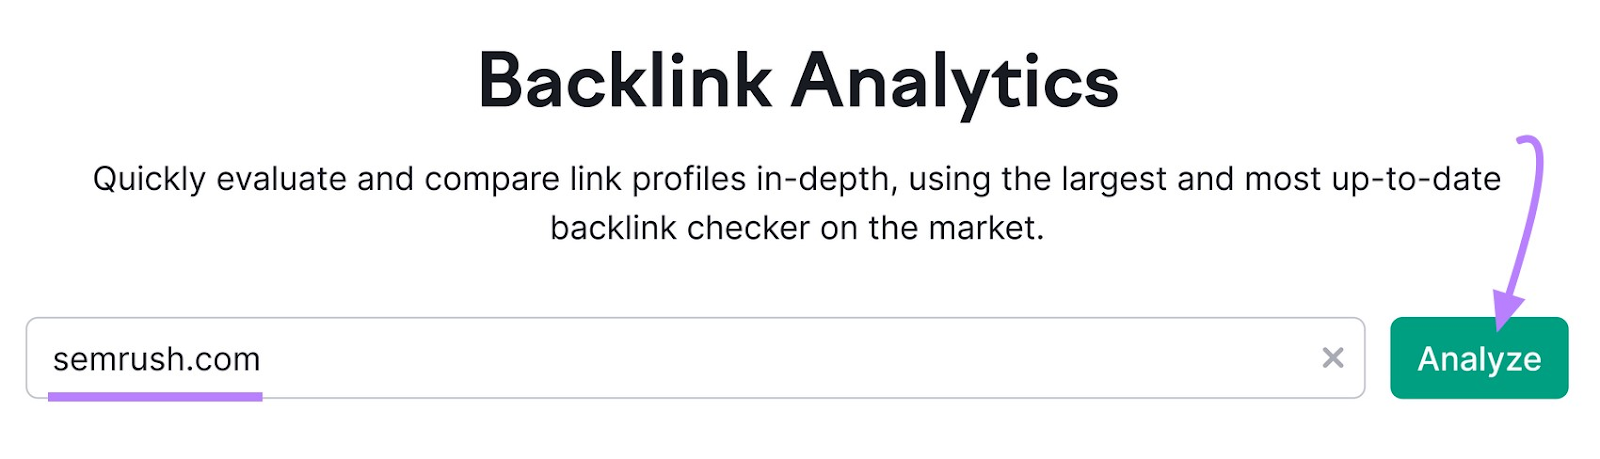 "semrush.com" entered in Backlink Analytics search bar